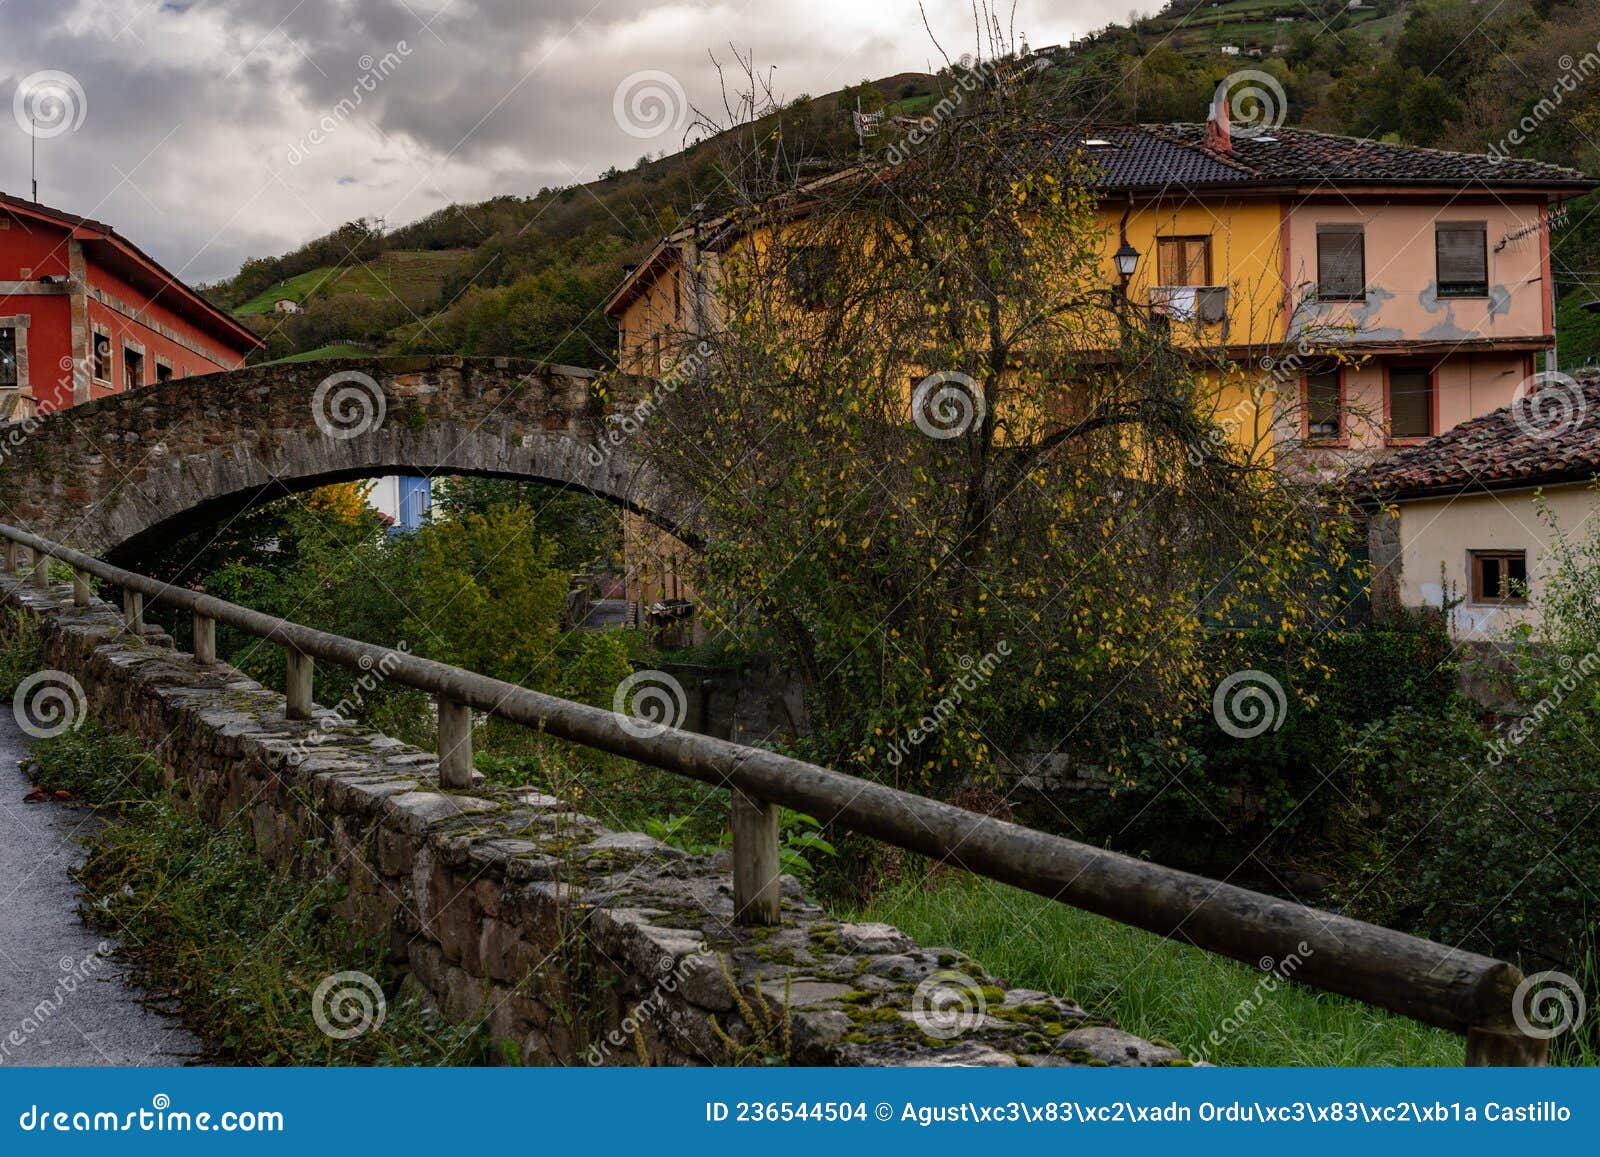 roman bridge of villoria, asturias